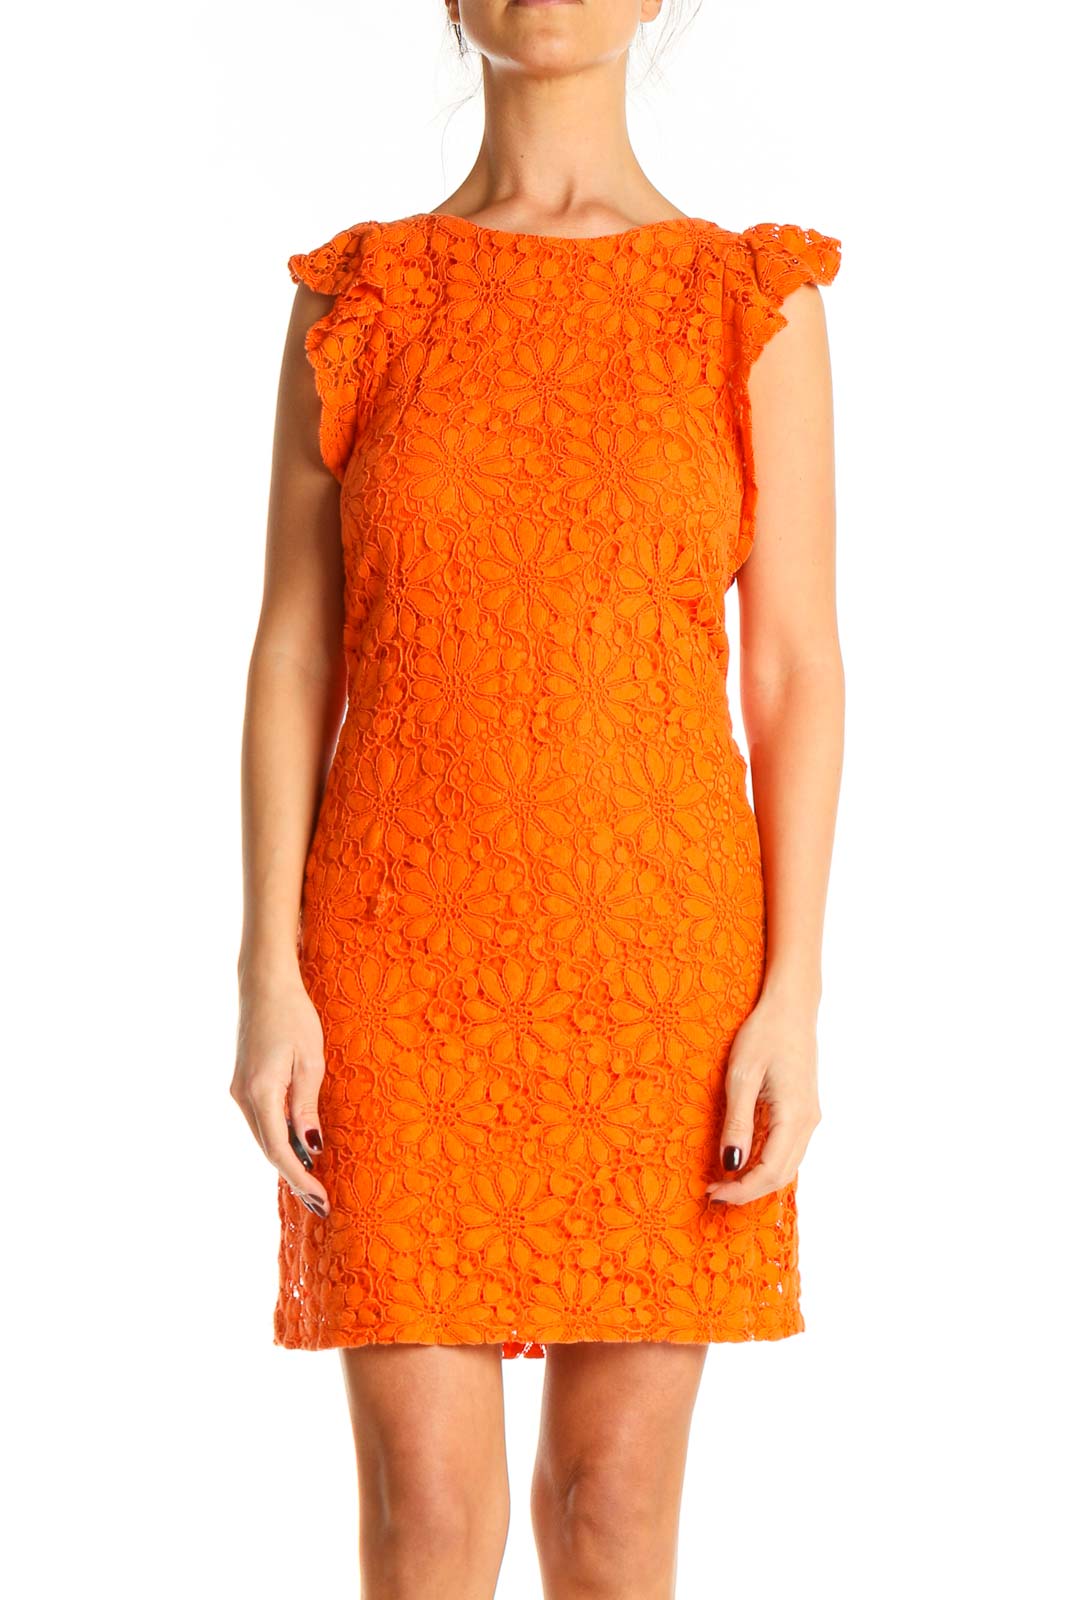 Orange Lace Work Sheath Dress Front